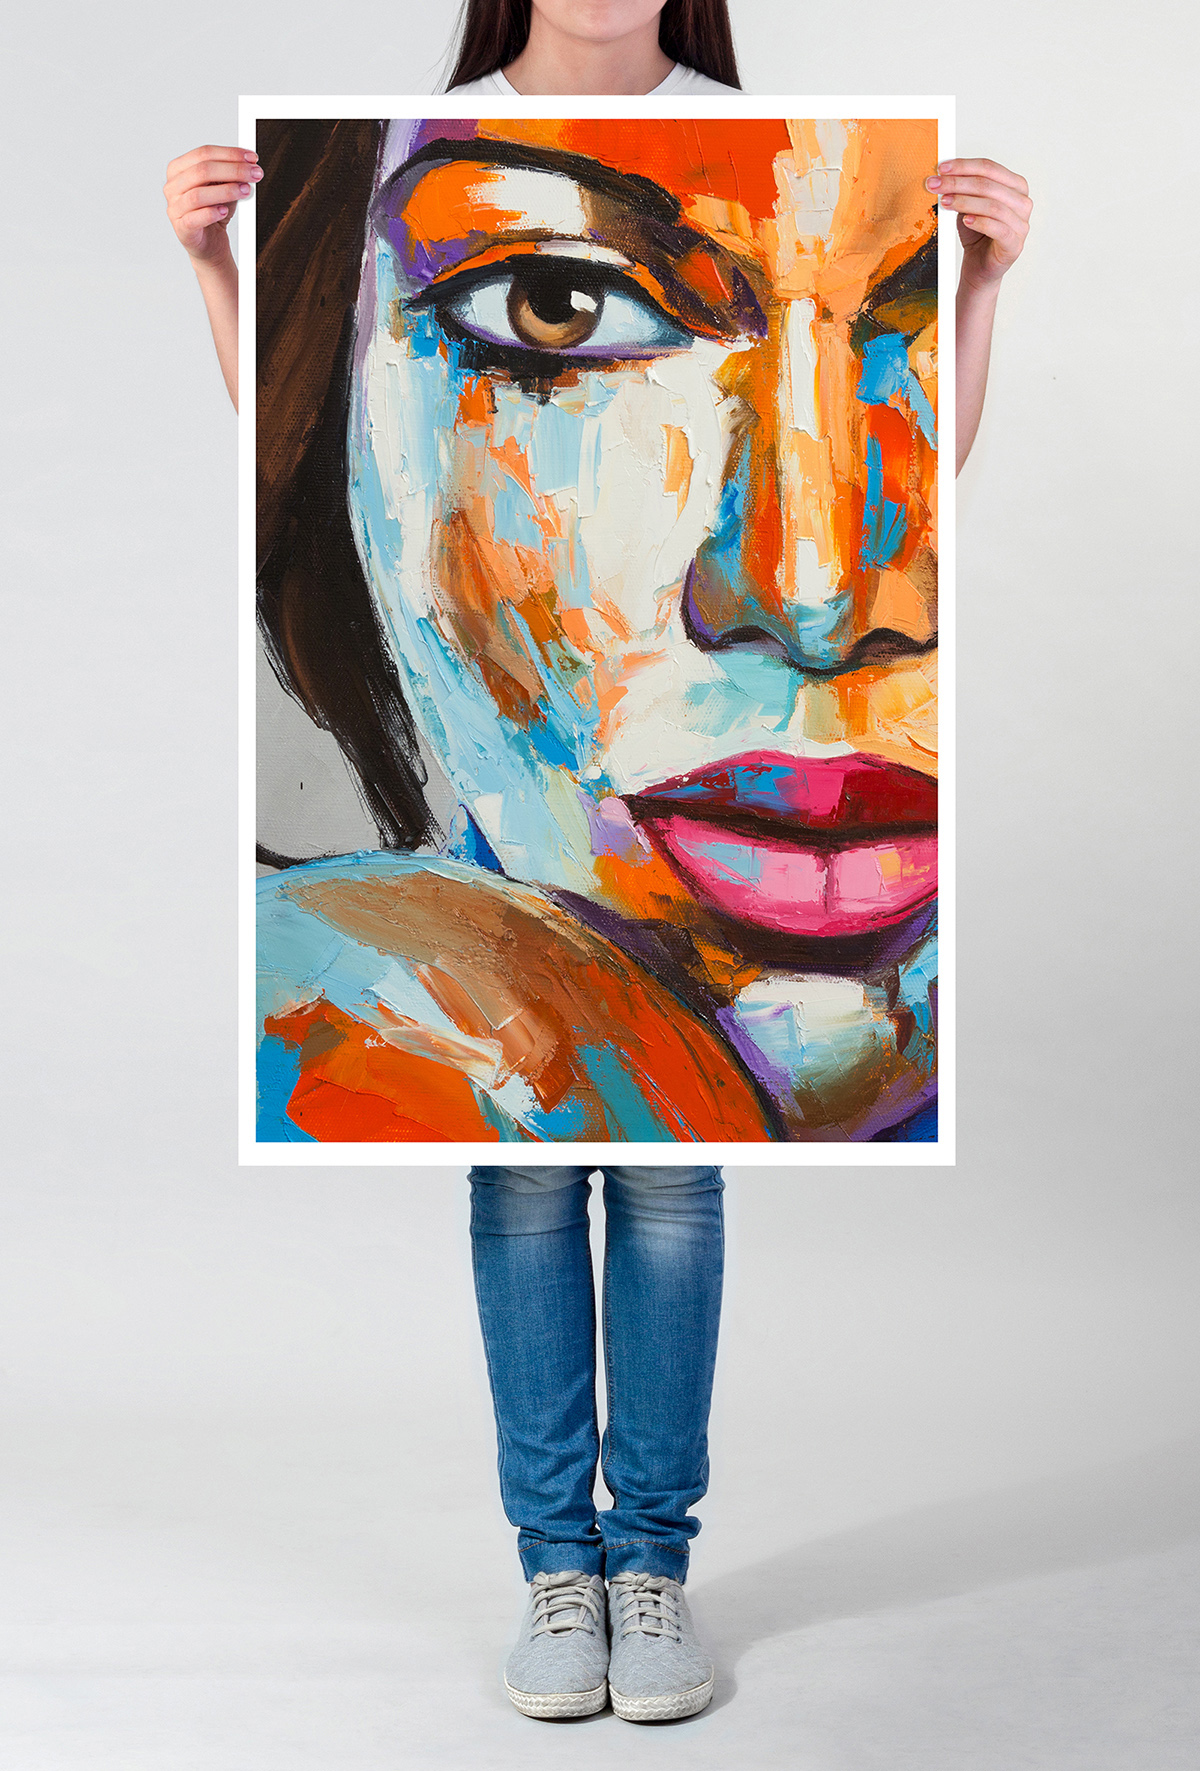 Buntes modernes Bild  Frauenporträt 60x90cm Poster